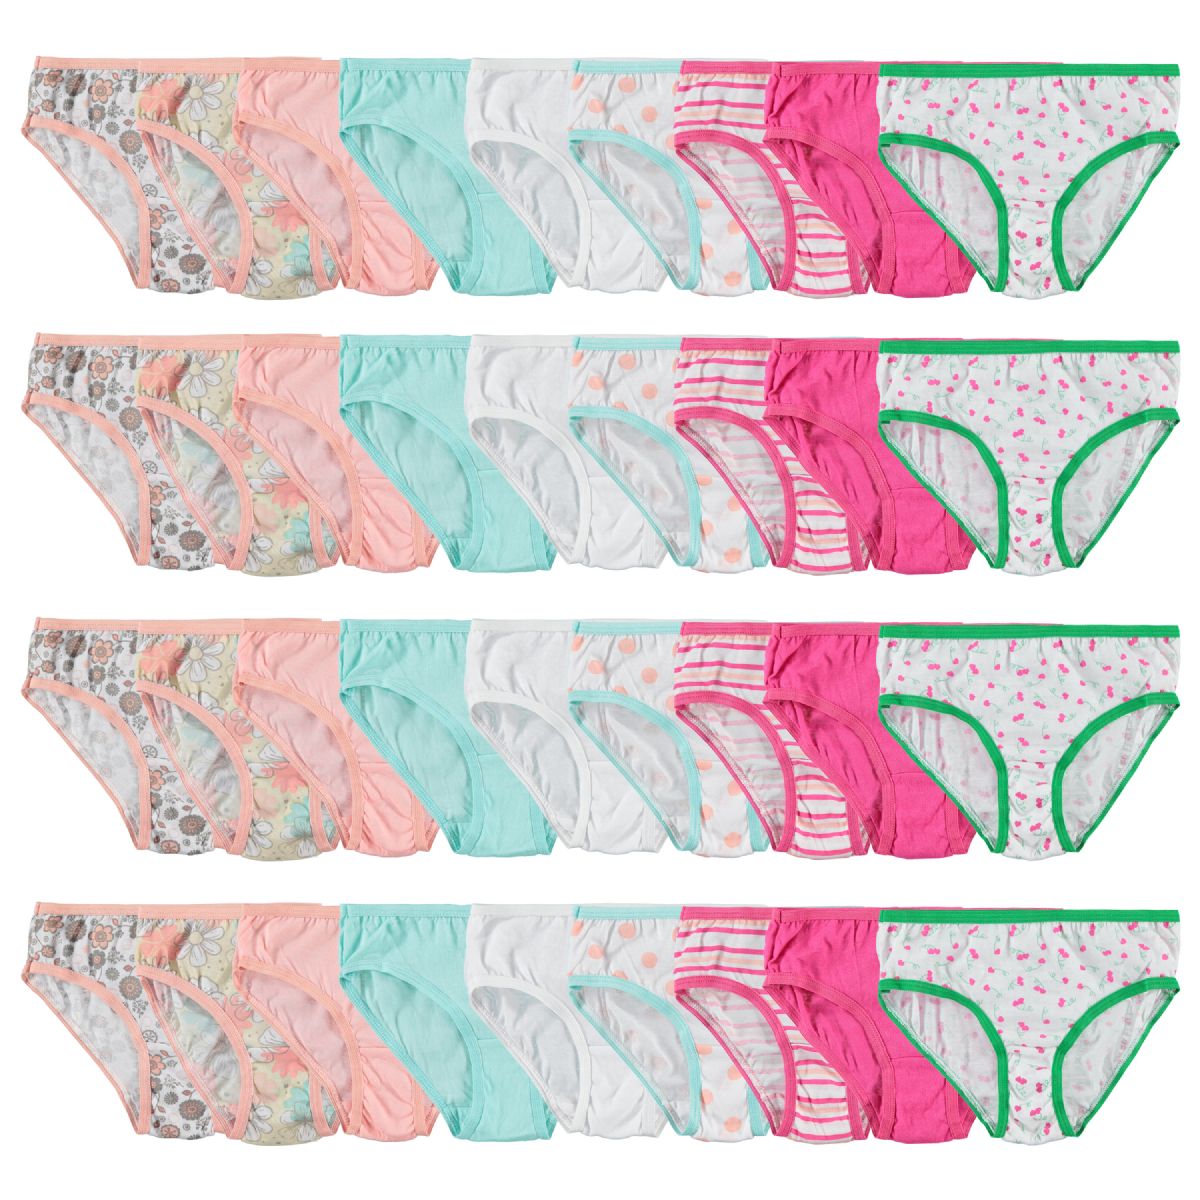 72 Wholesale Girls Cotton Blend Assorted Printed Underwear Size 4t